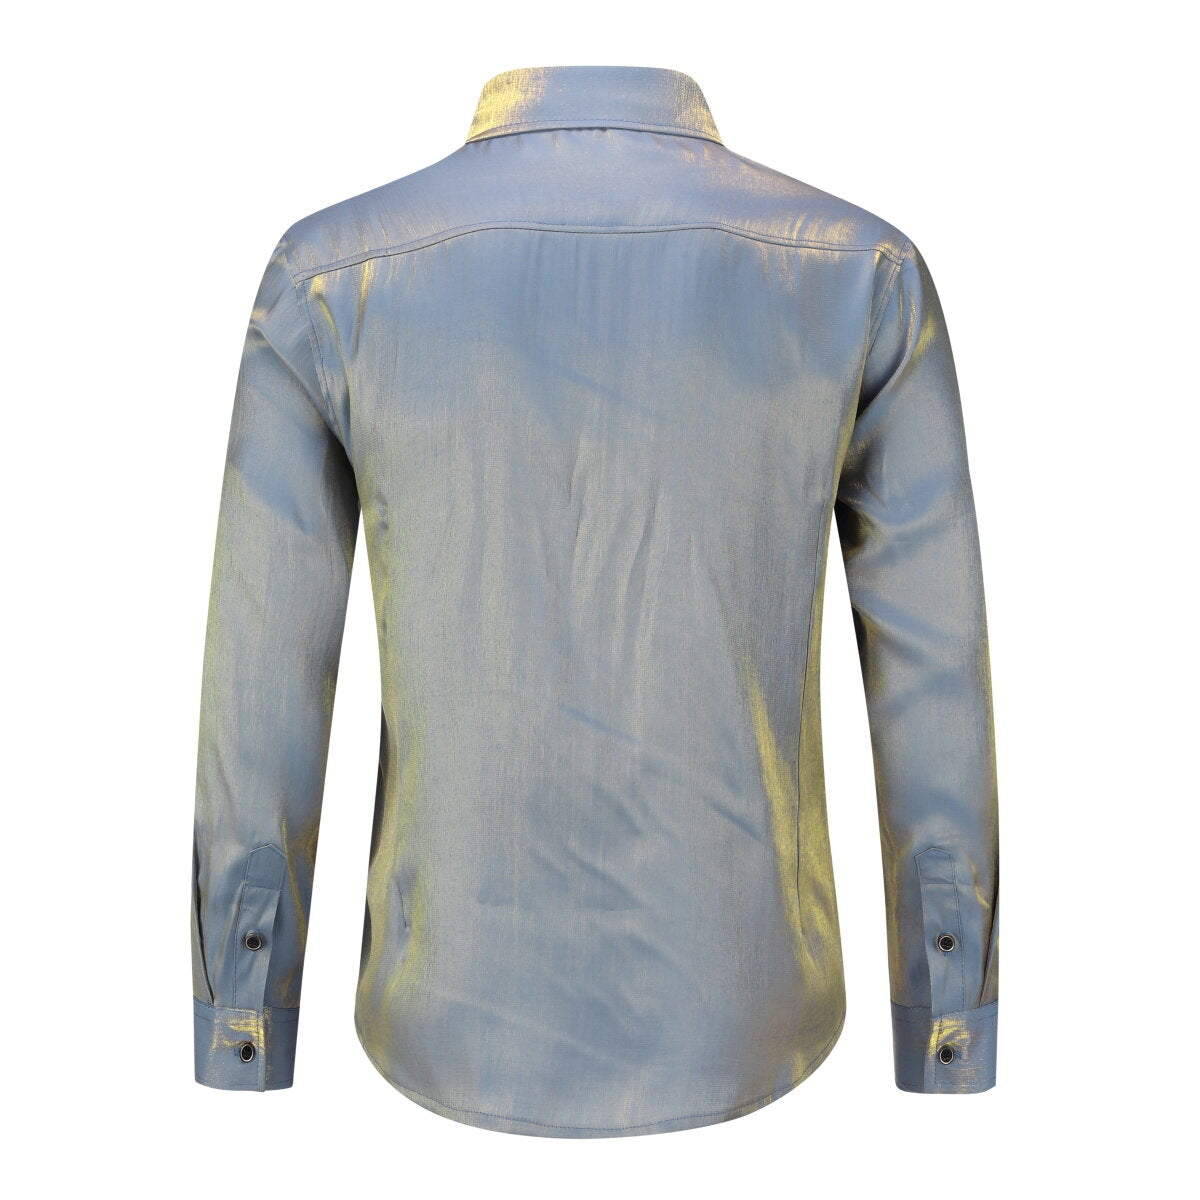 Men's Solid Color Silk Comfort Long Sleeve Shirt Navy